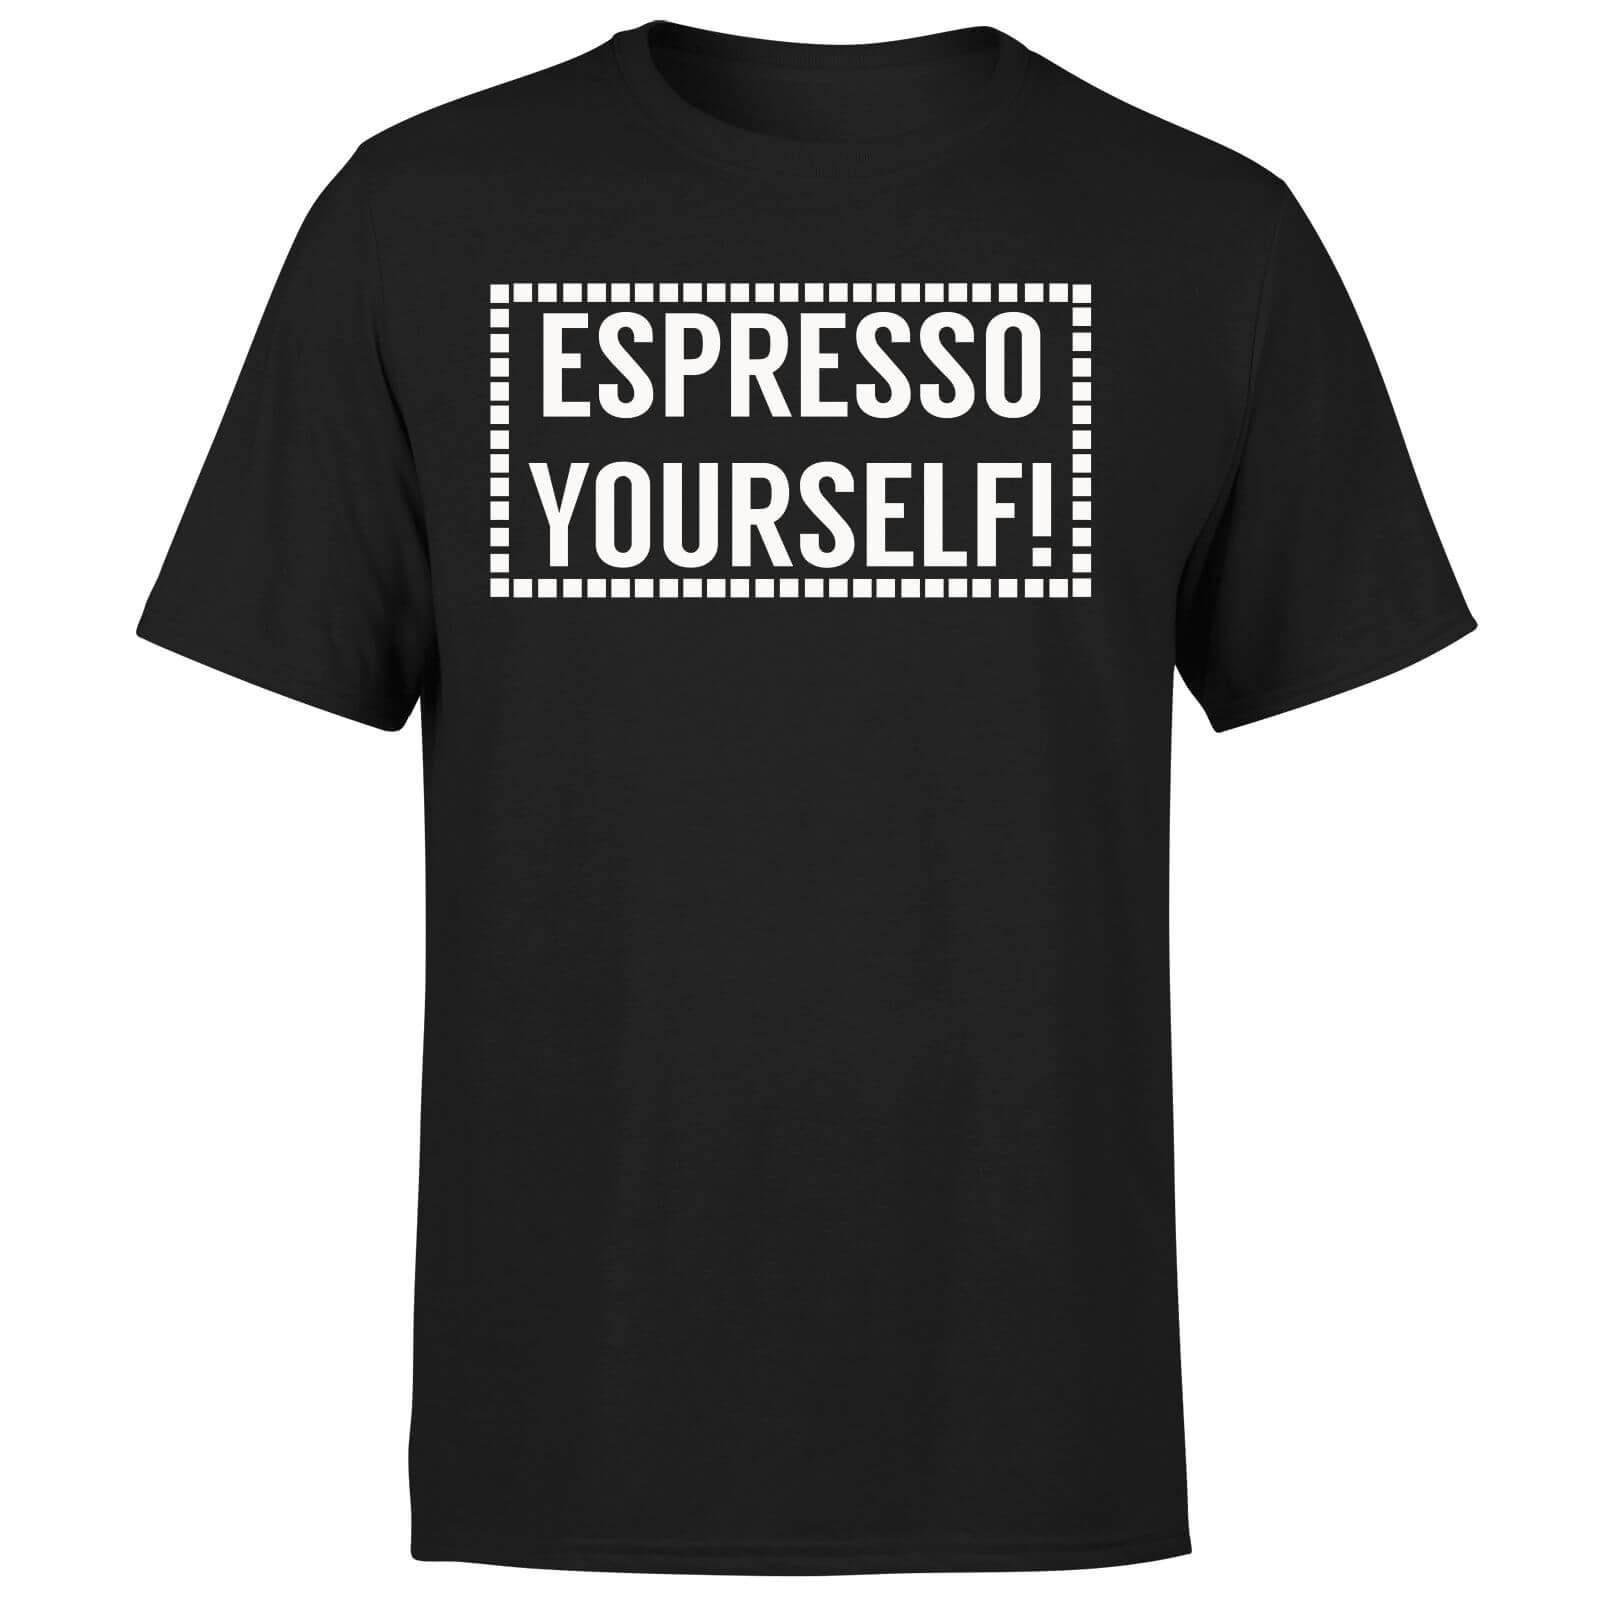 Espresso Yourself T-Shirt - Black - S - Black